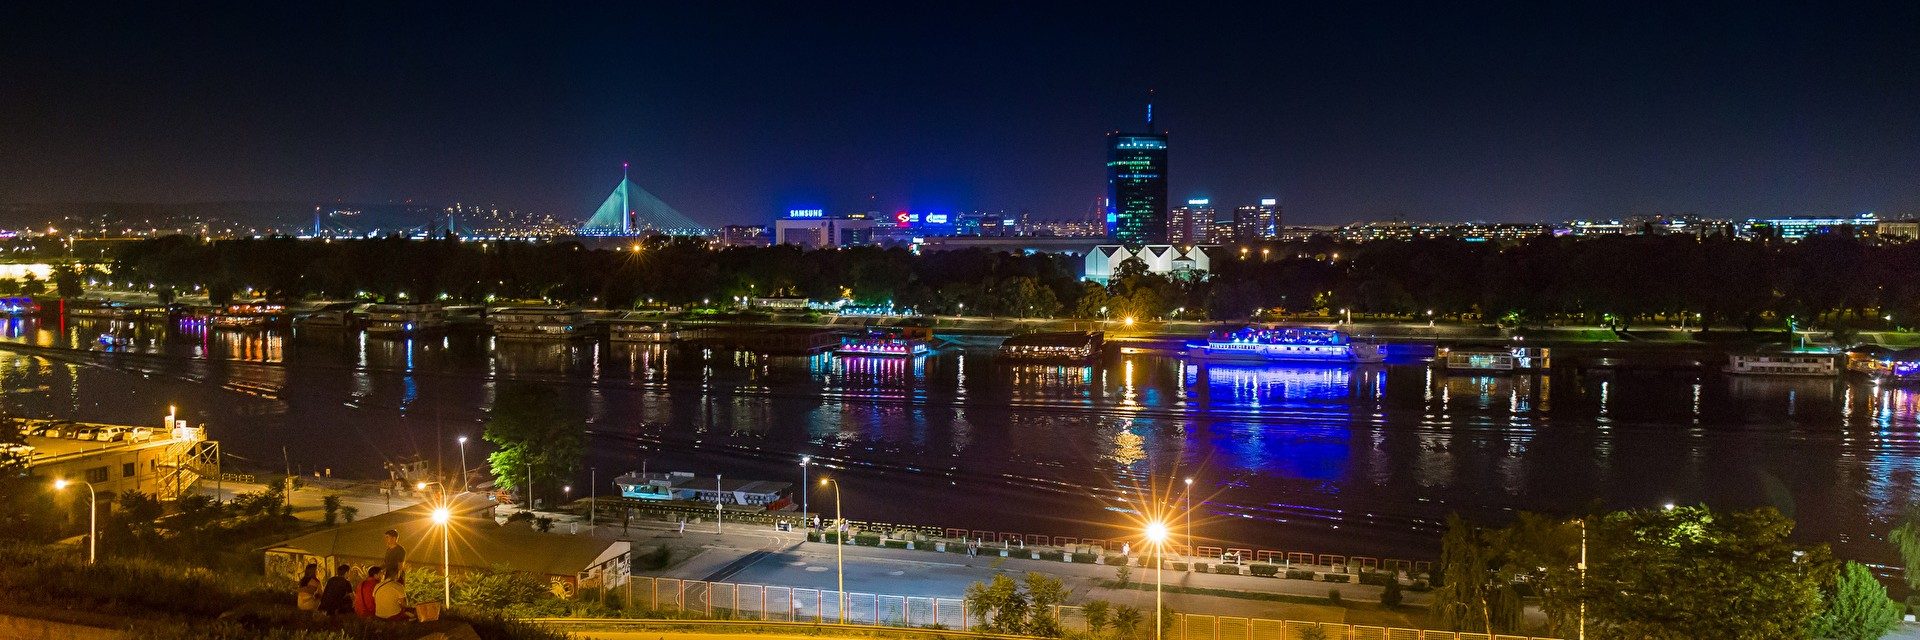 Rivers_Marinas_Belgrade_Serbia_Street_lights_Night_560362_1920x1080